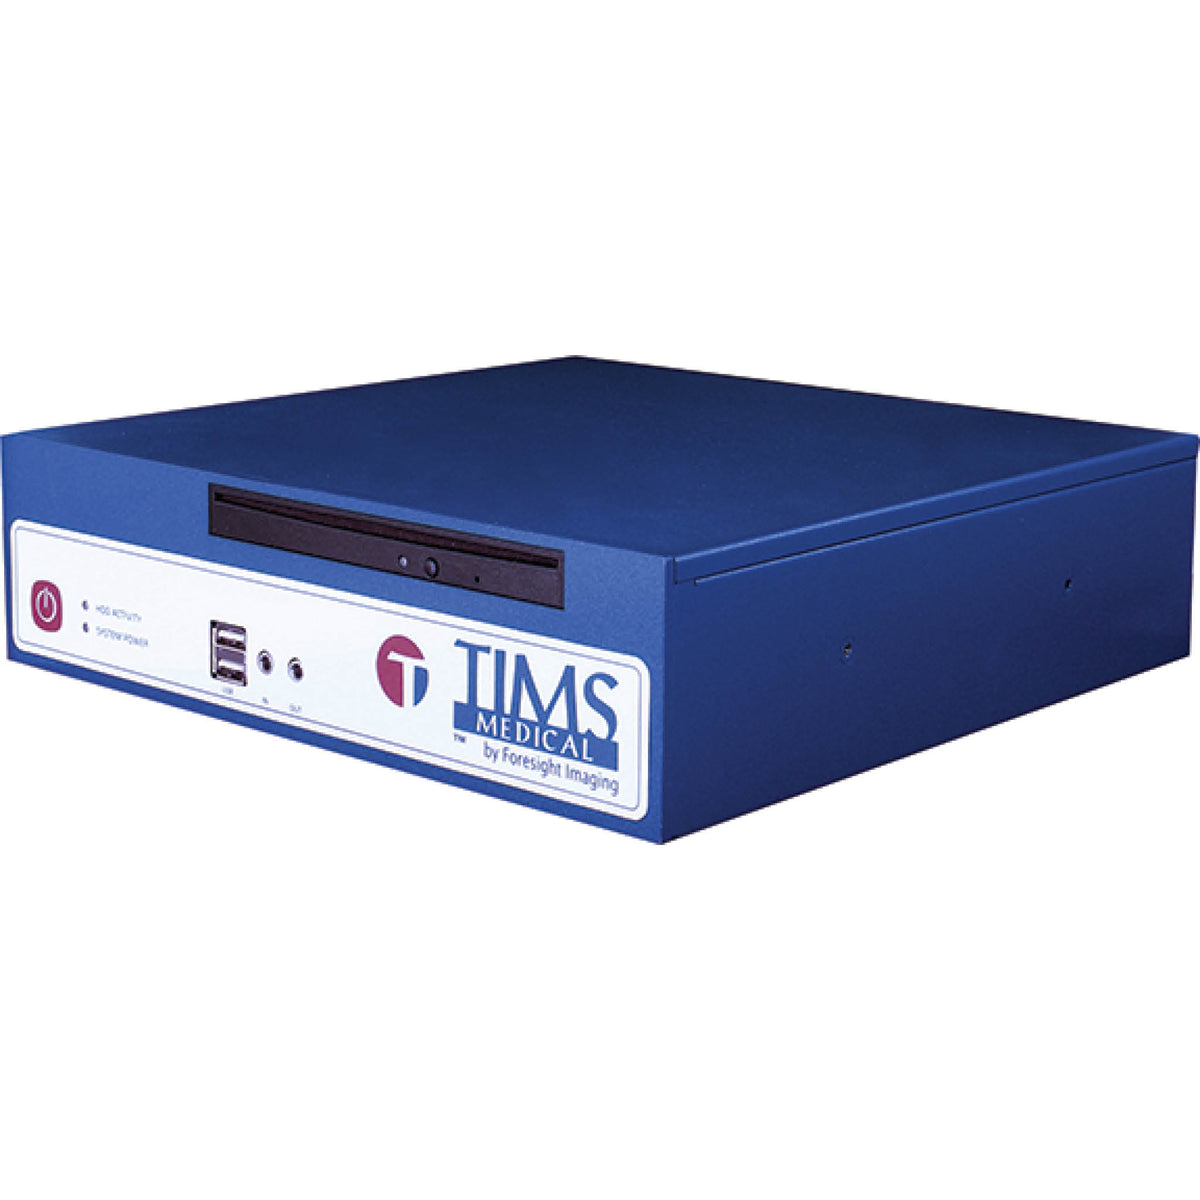 TIMS MVP (Medical Video Platform) recording solution box.